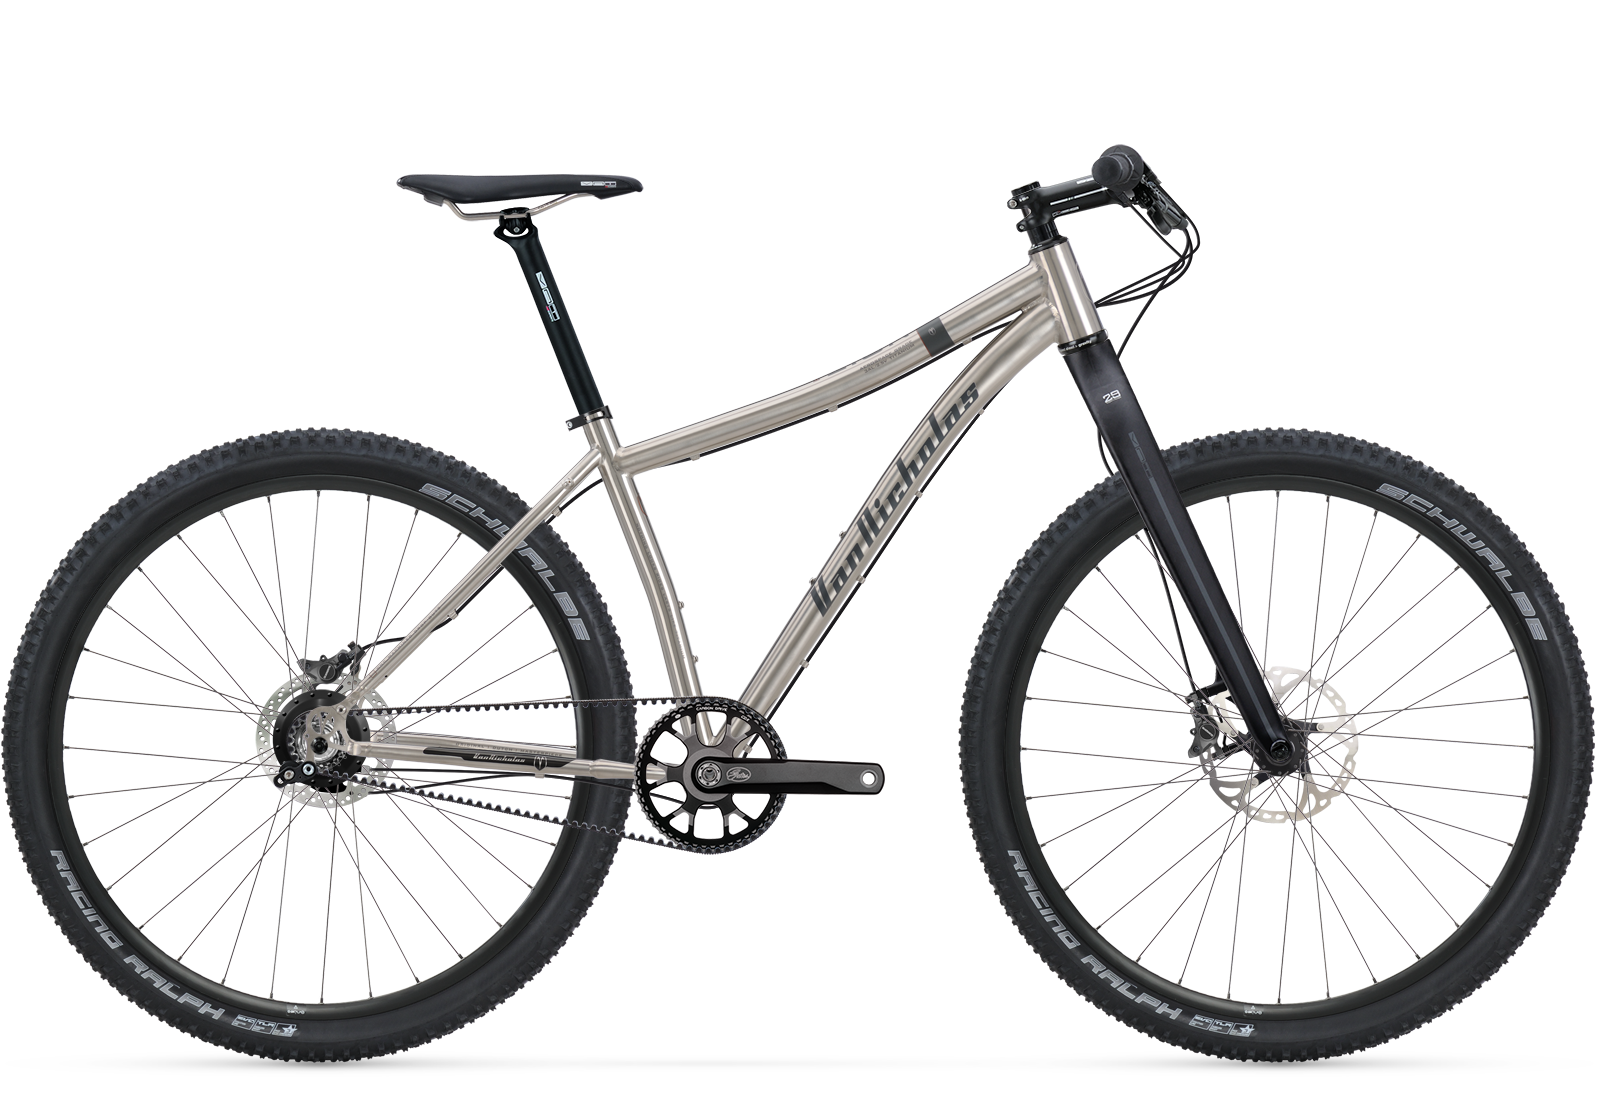 woordenboek Ondeugd Herrie Zion Rohloff, responsive titanium mountain bike | Van Nicholas